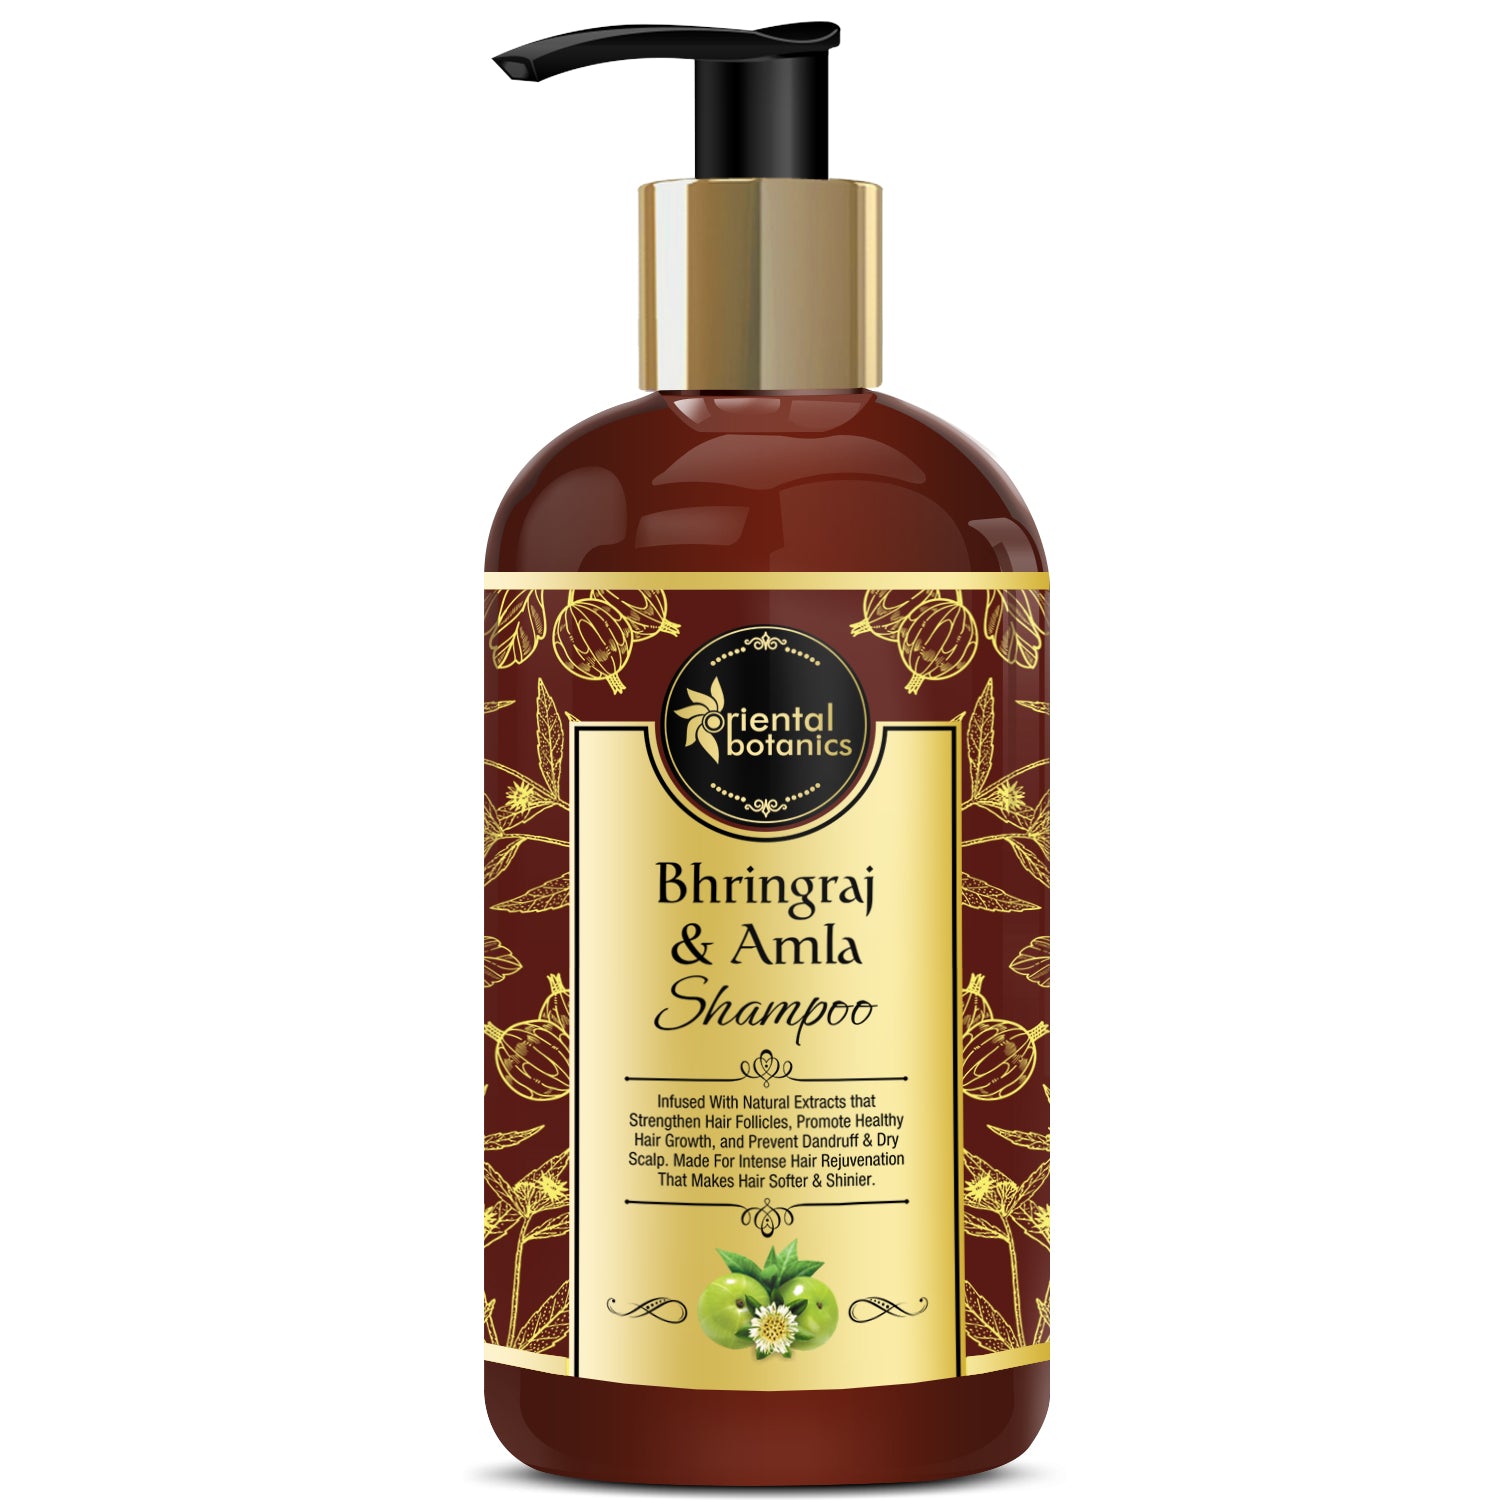 Oriental Botanics Bhringraj & Amla Hair Shampoo, No Sls/ Sulphate, Paraben, Silicones, Strengthens Hair, Promotes Growth, 300 ml